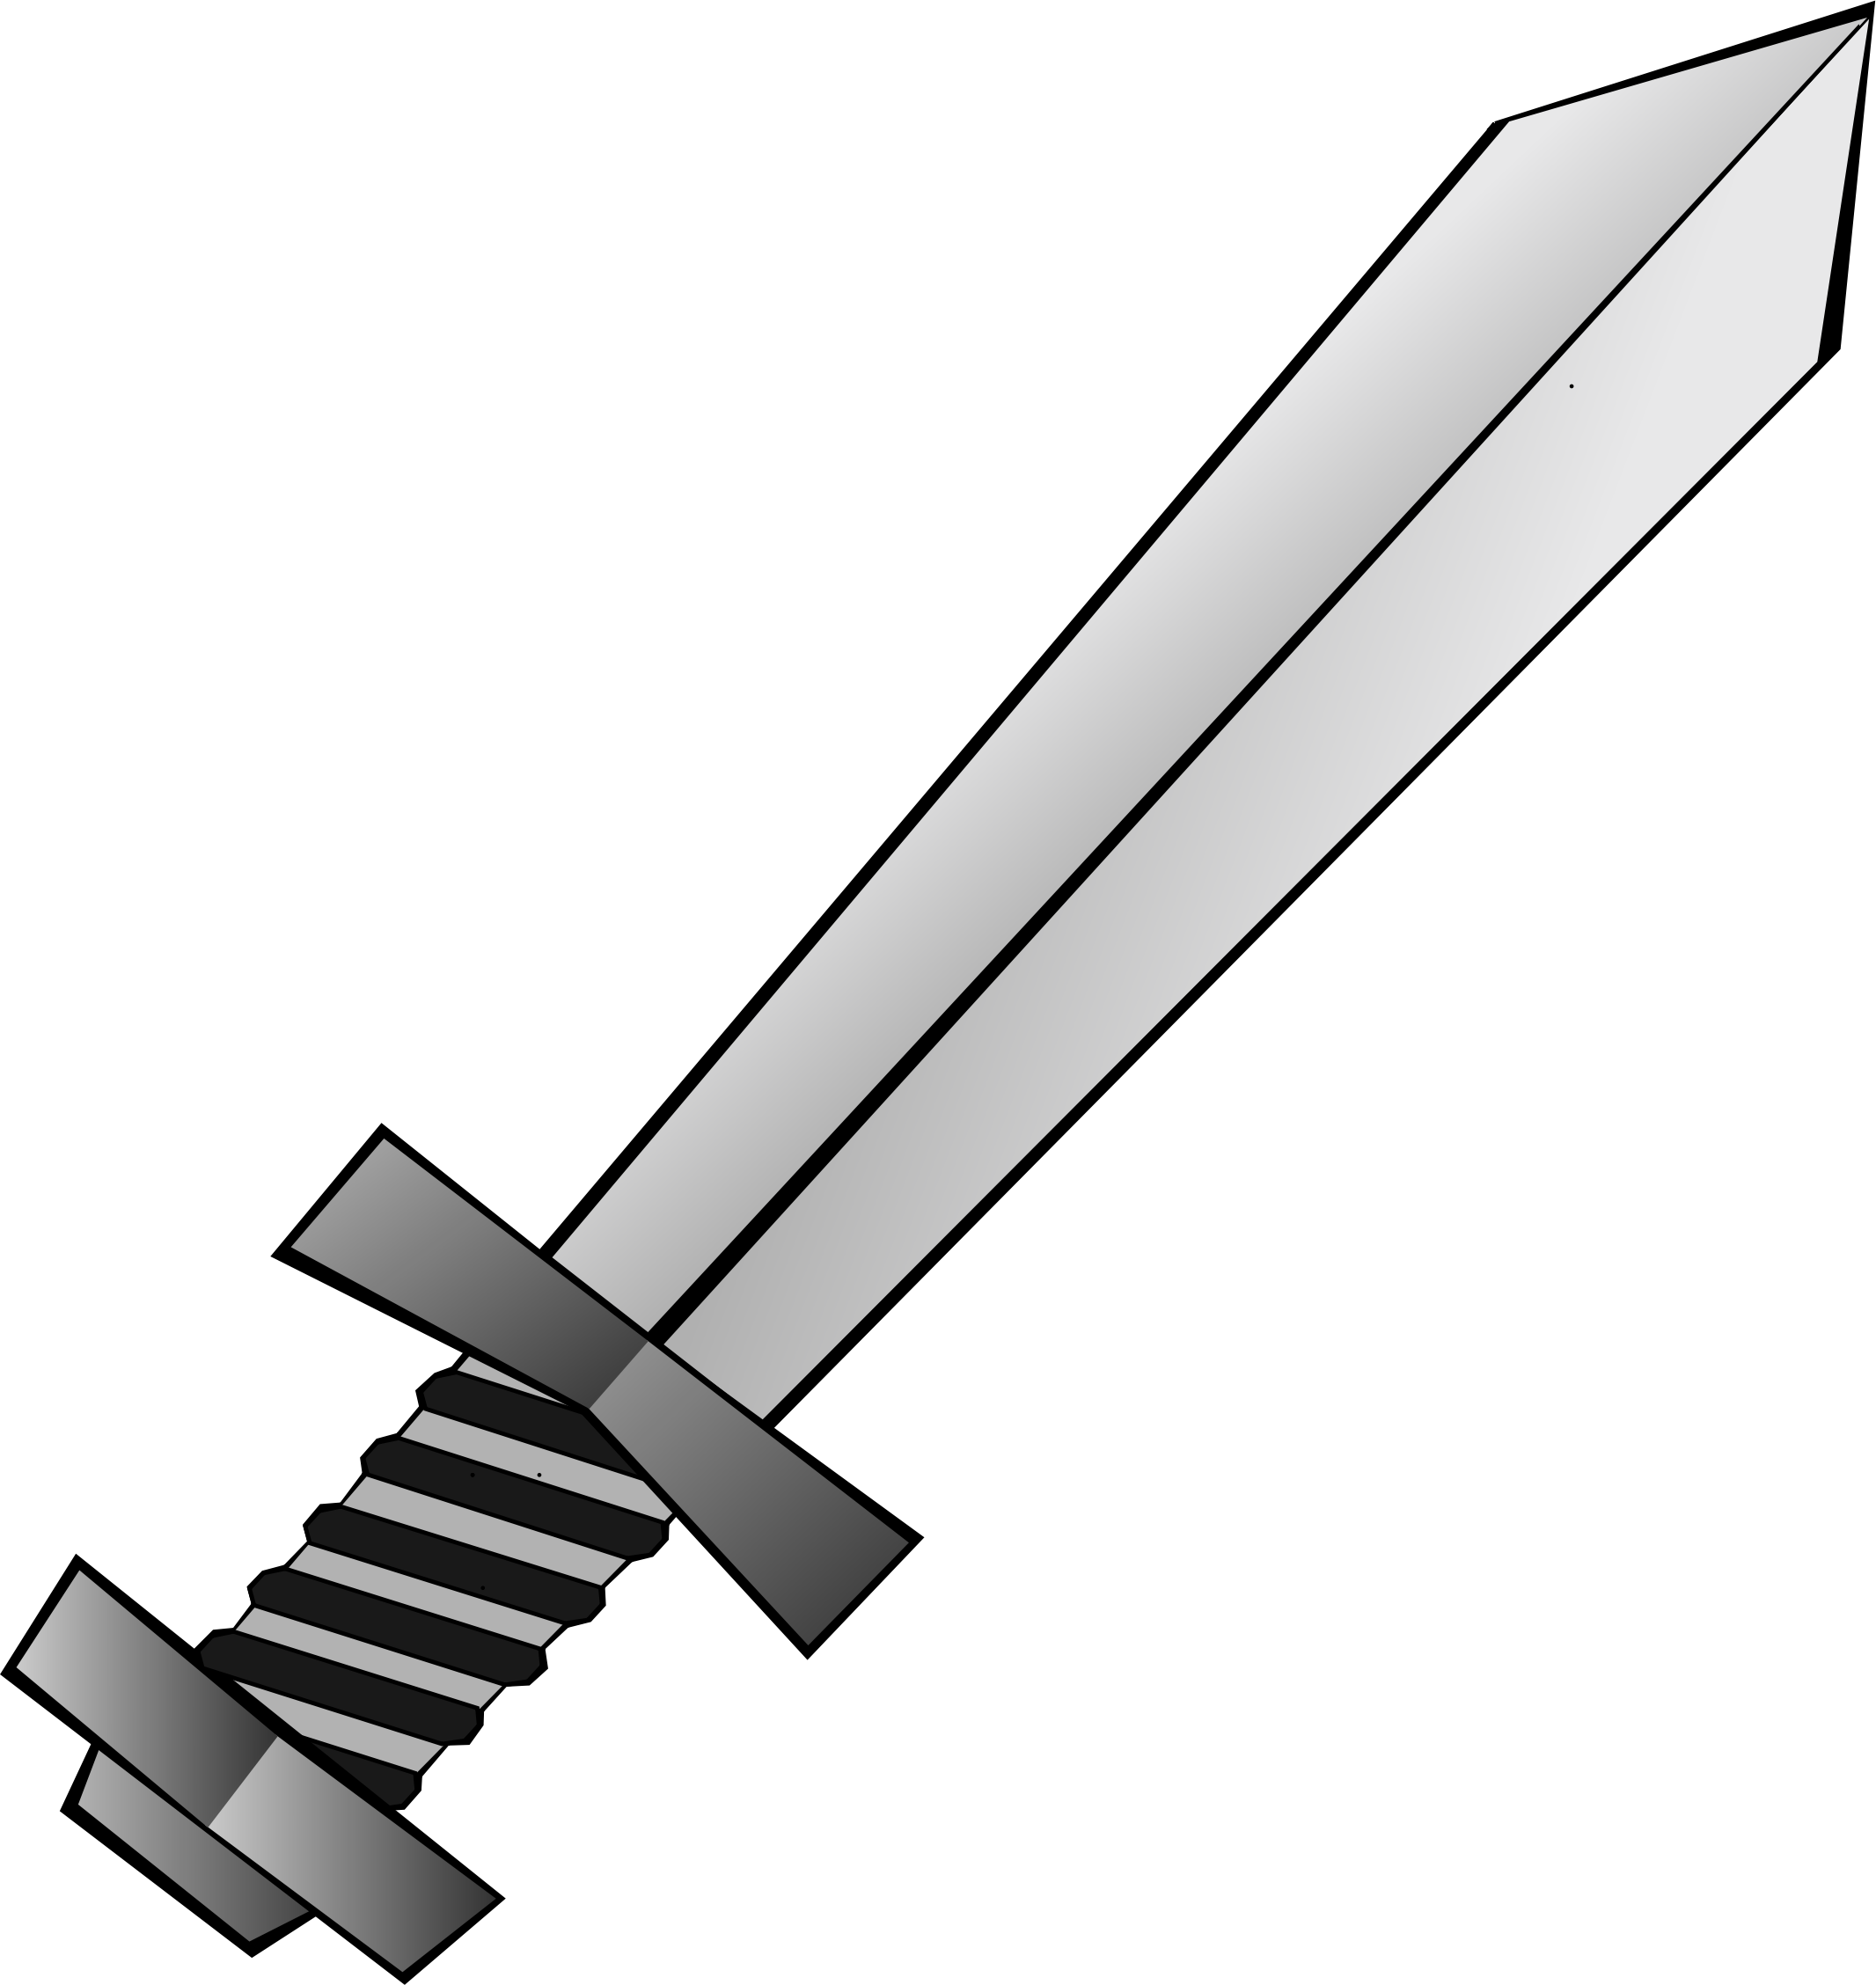 Pirate sword clip art; 50  Sw